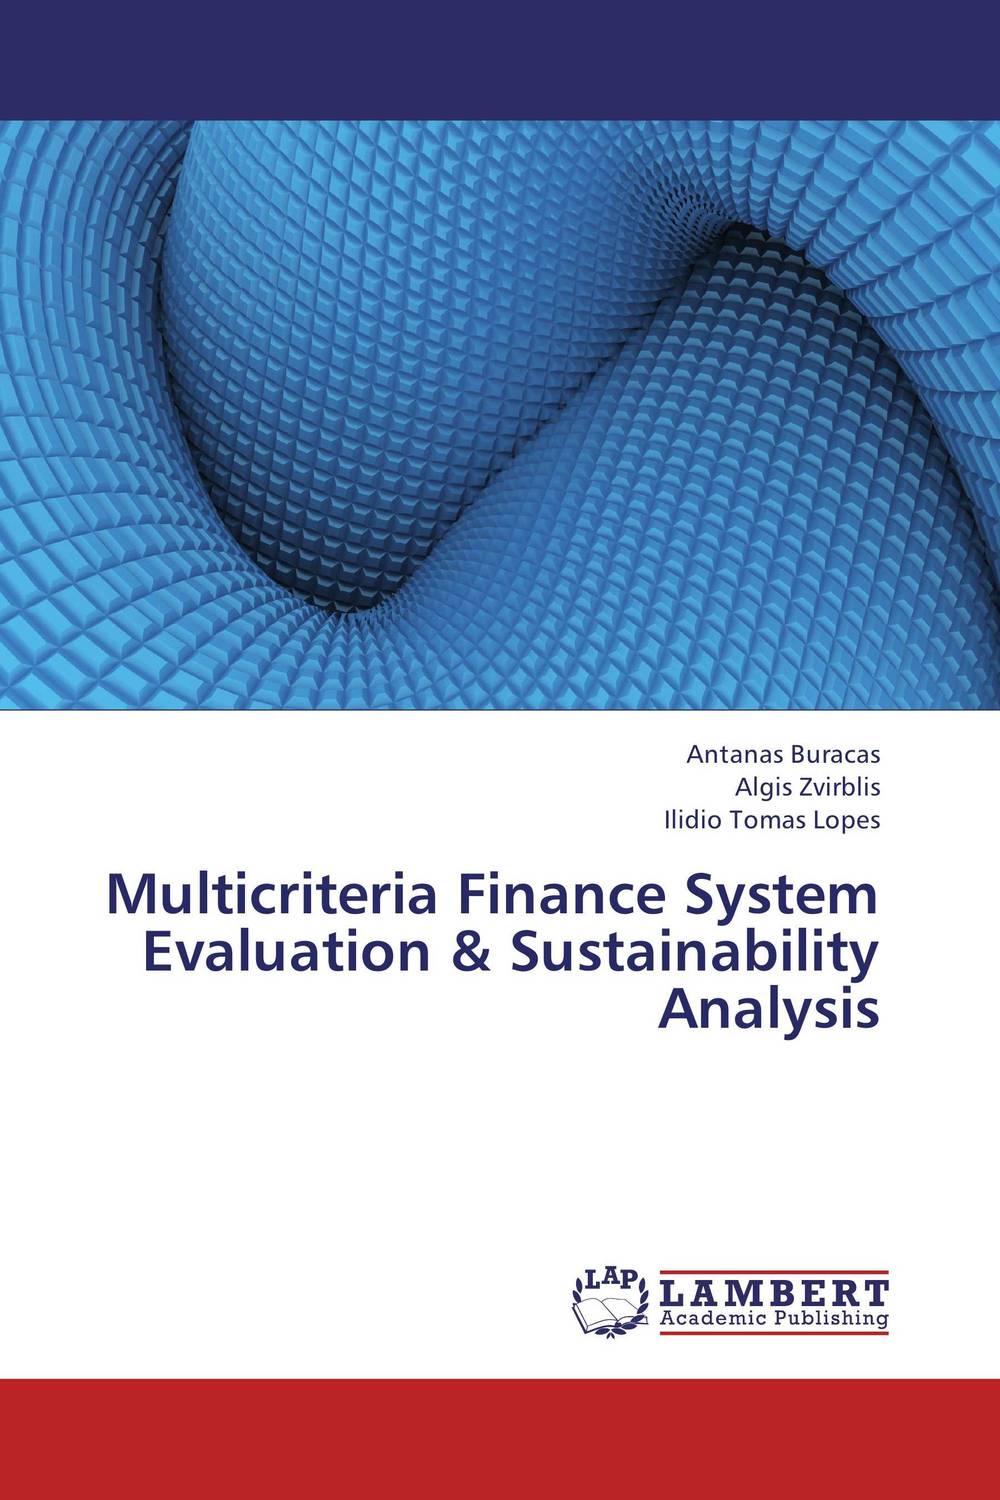 Multicriteria Finance System Evaluation & Sustainability Analysis